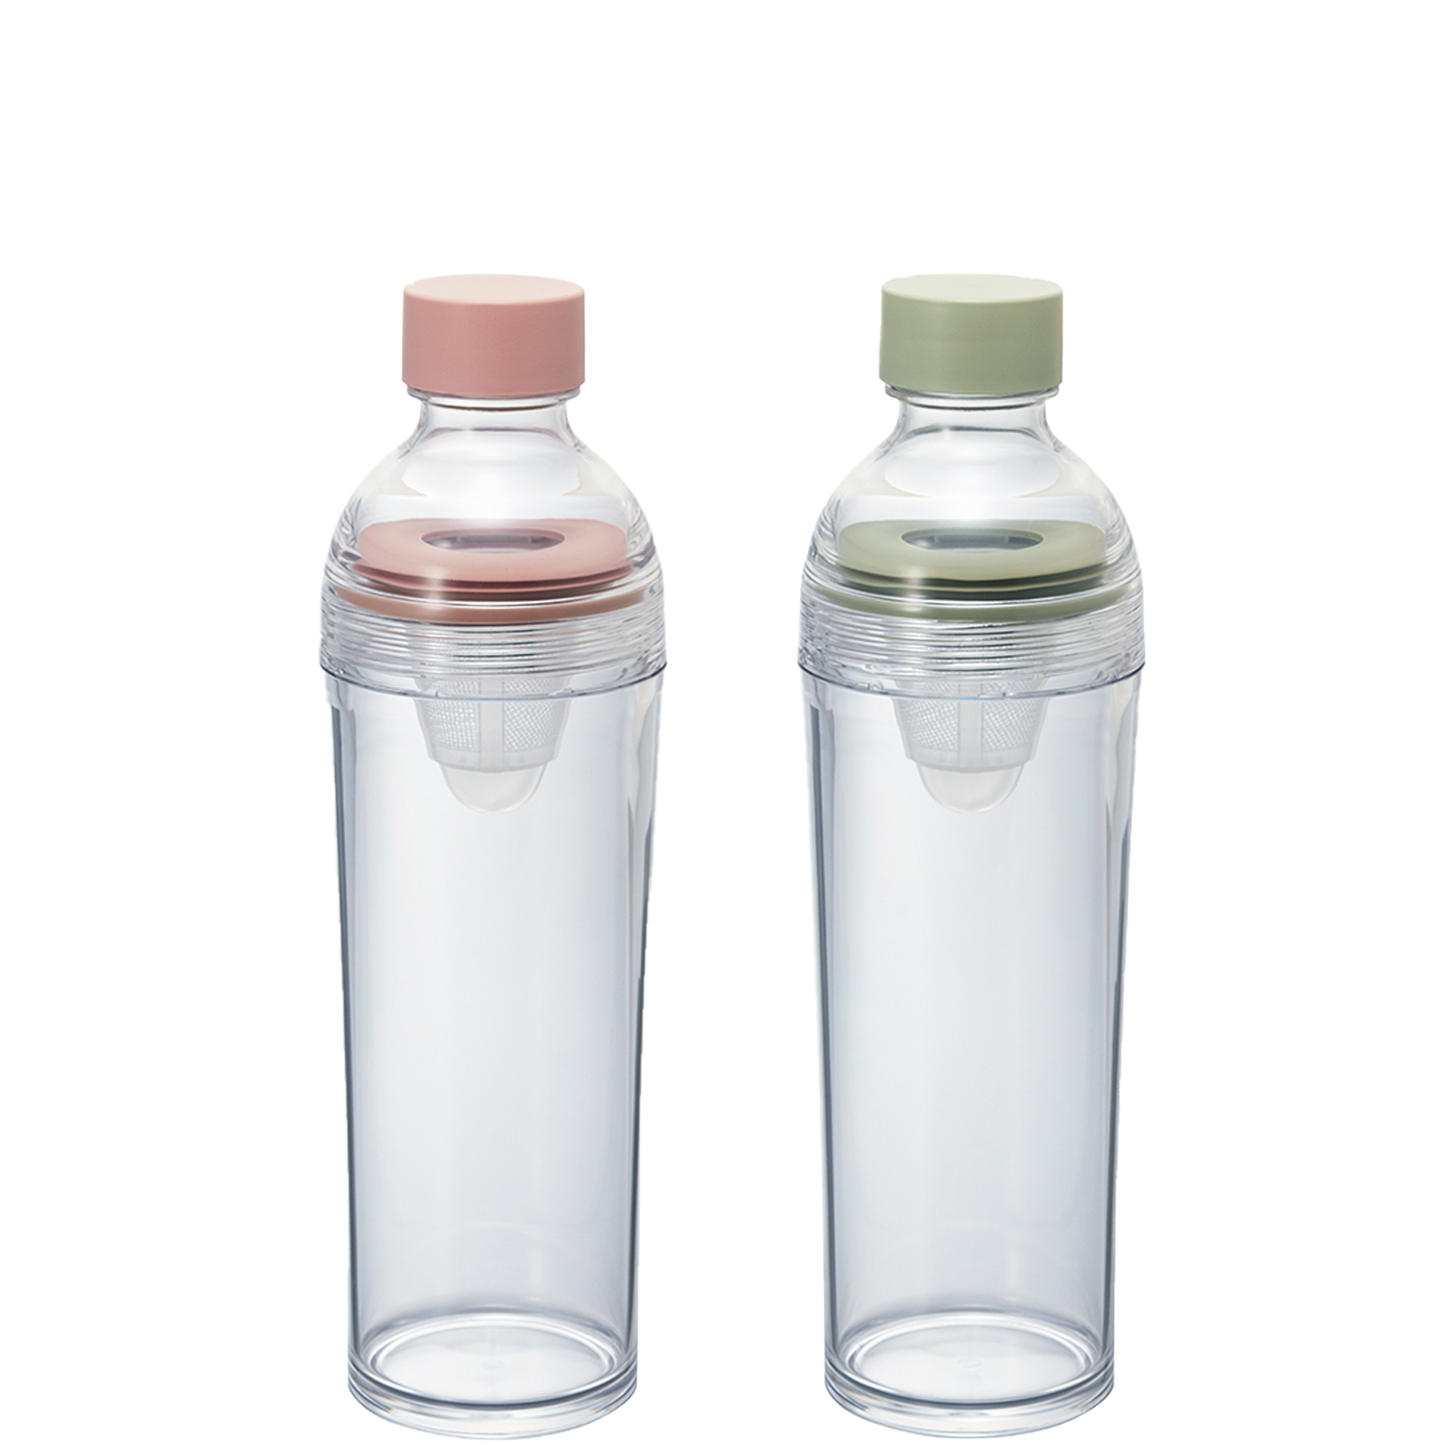 Filter-in Bottle Portable